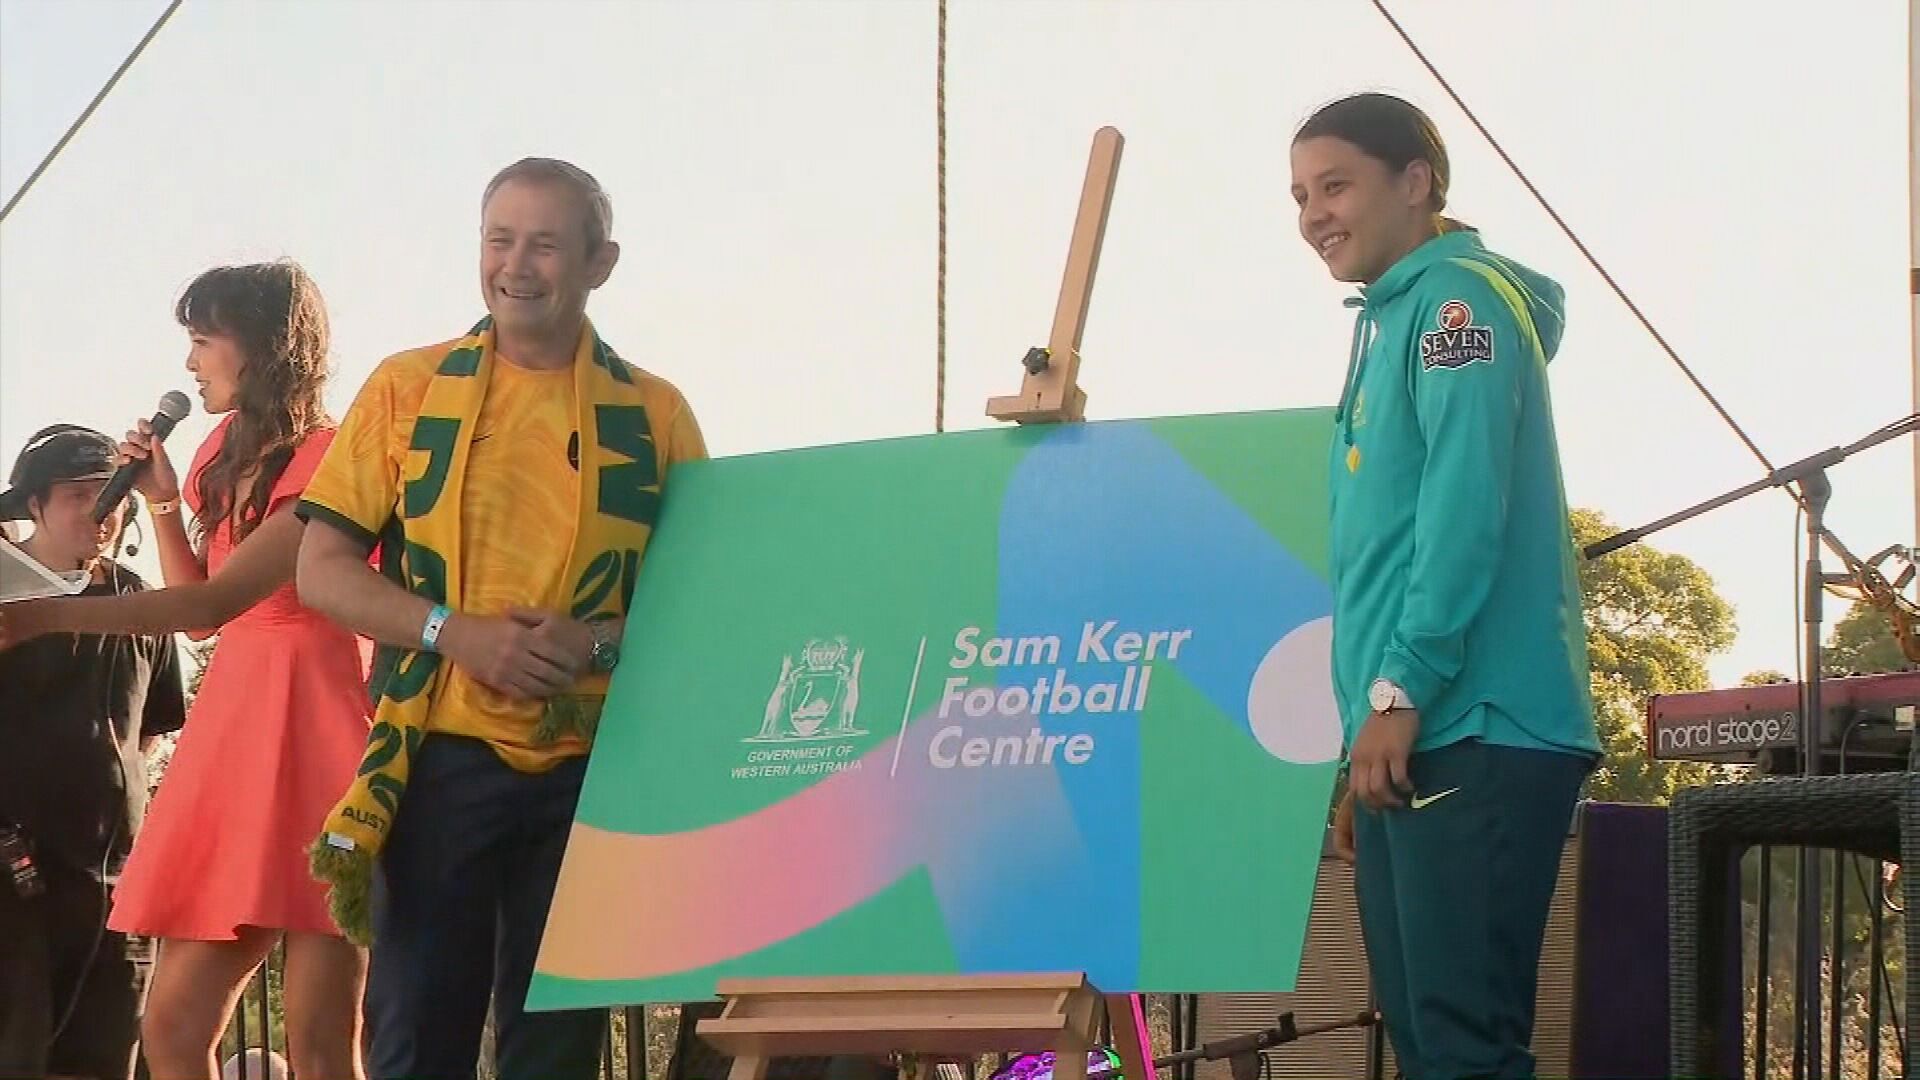 Sam Kerr opens the Sam Kerr Football Centre in Perth